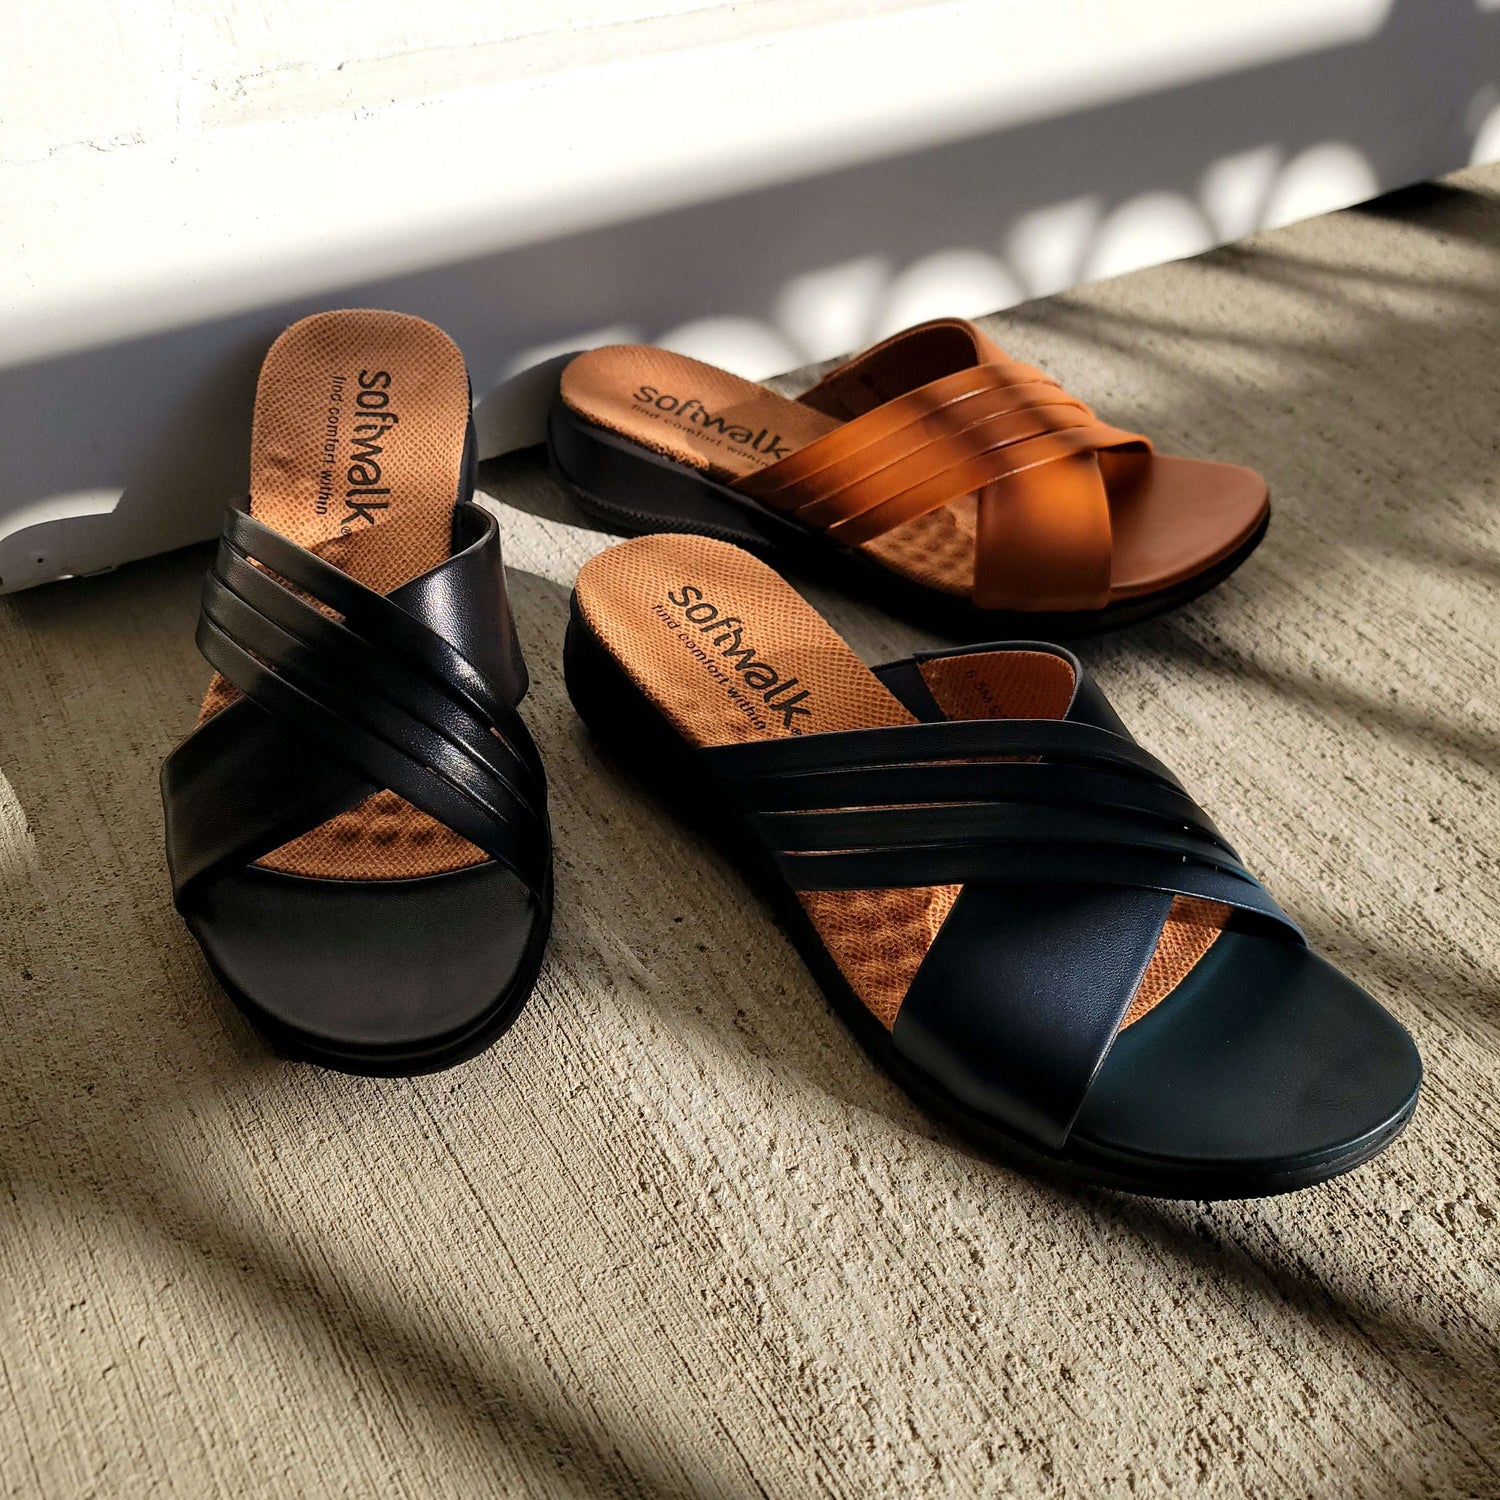 Sofwalk Sandals